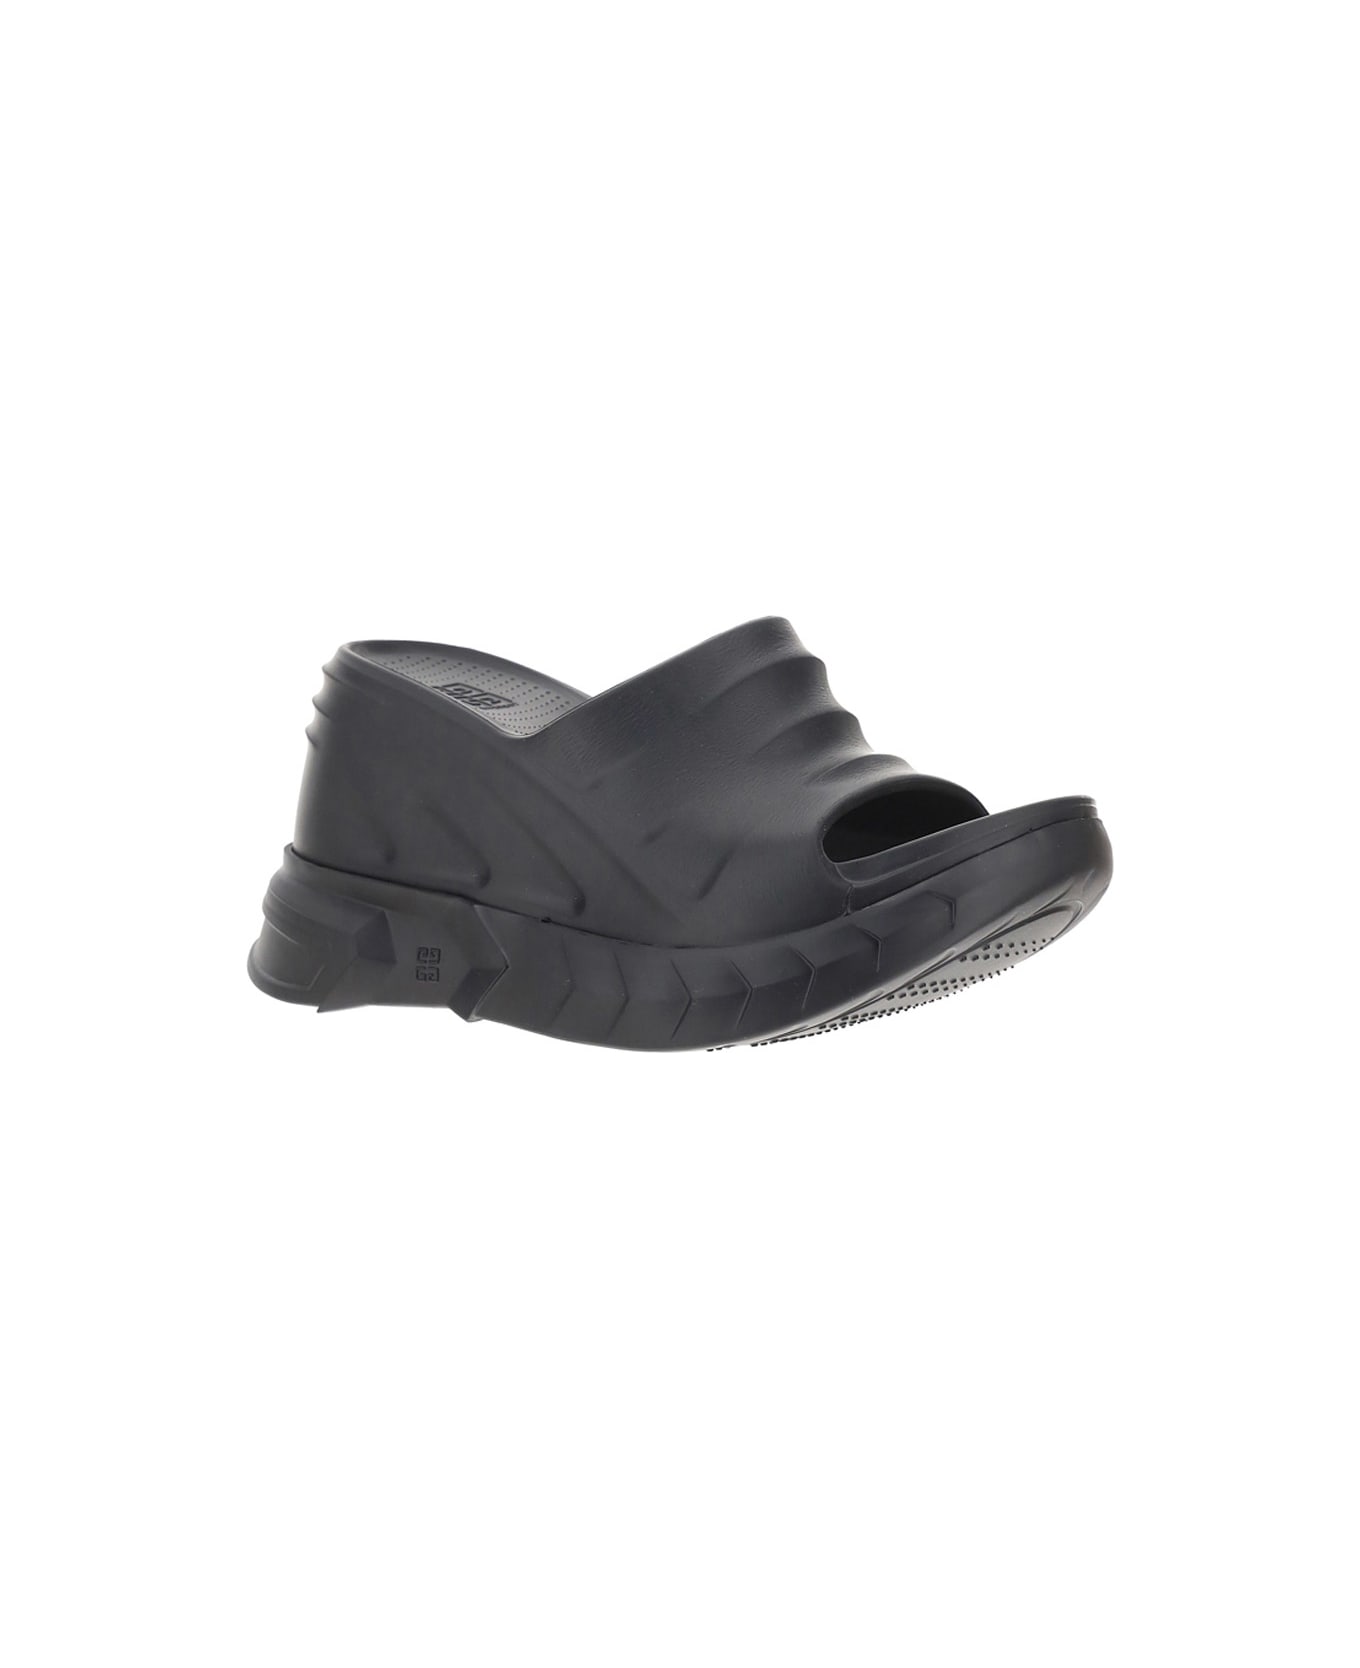 Givenchy Marshmallow Wedge Sandals - Black サンダル